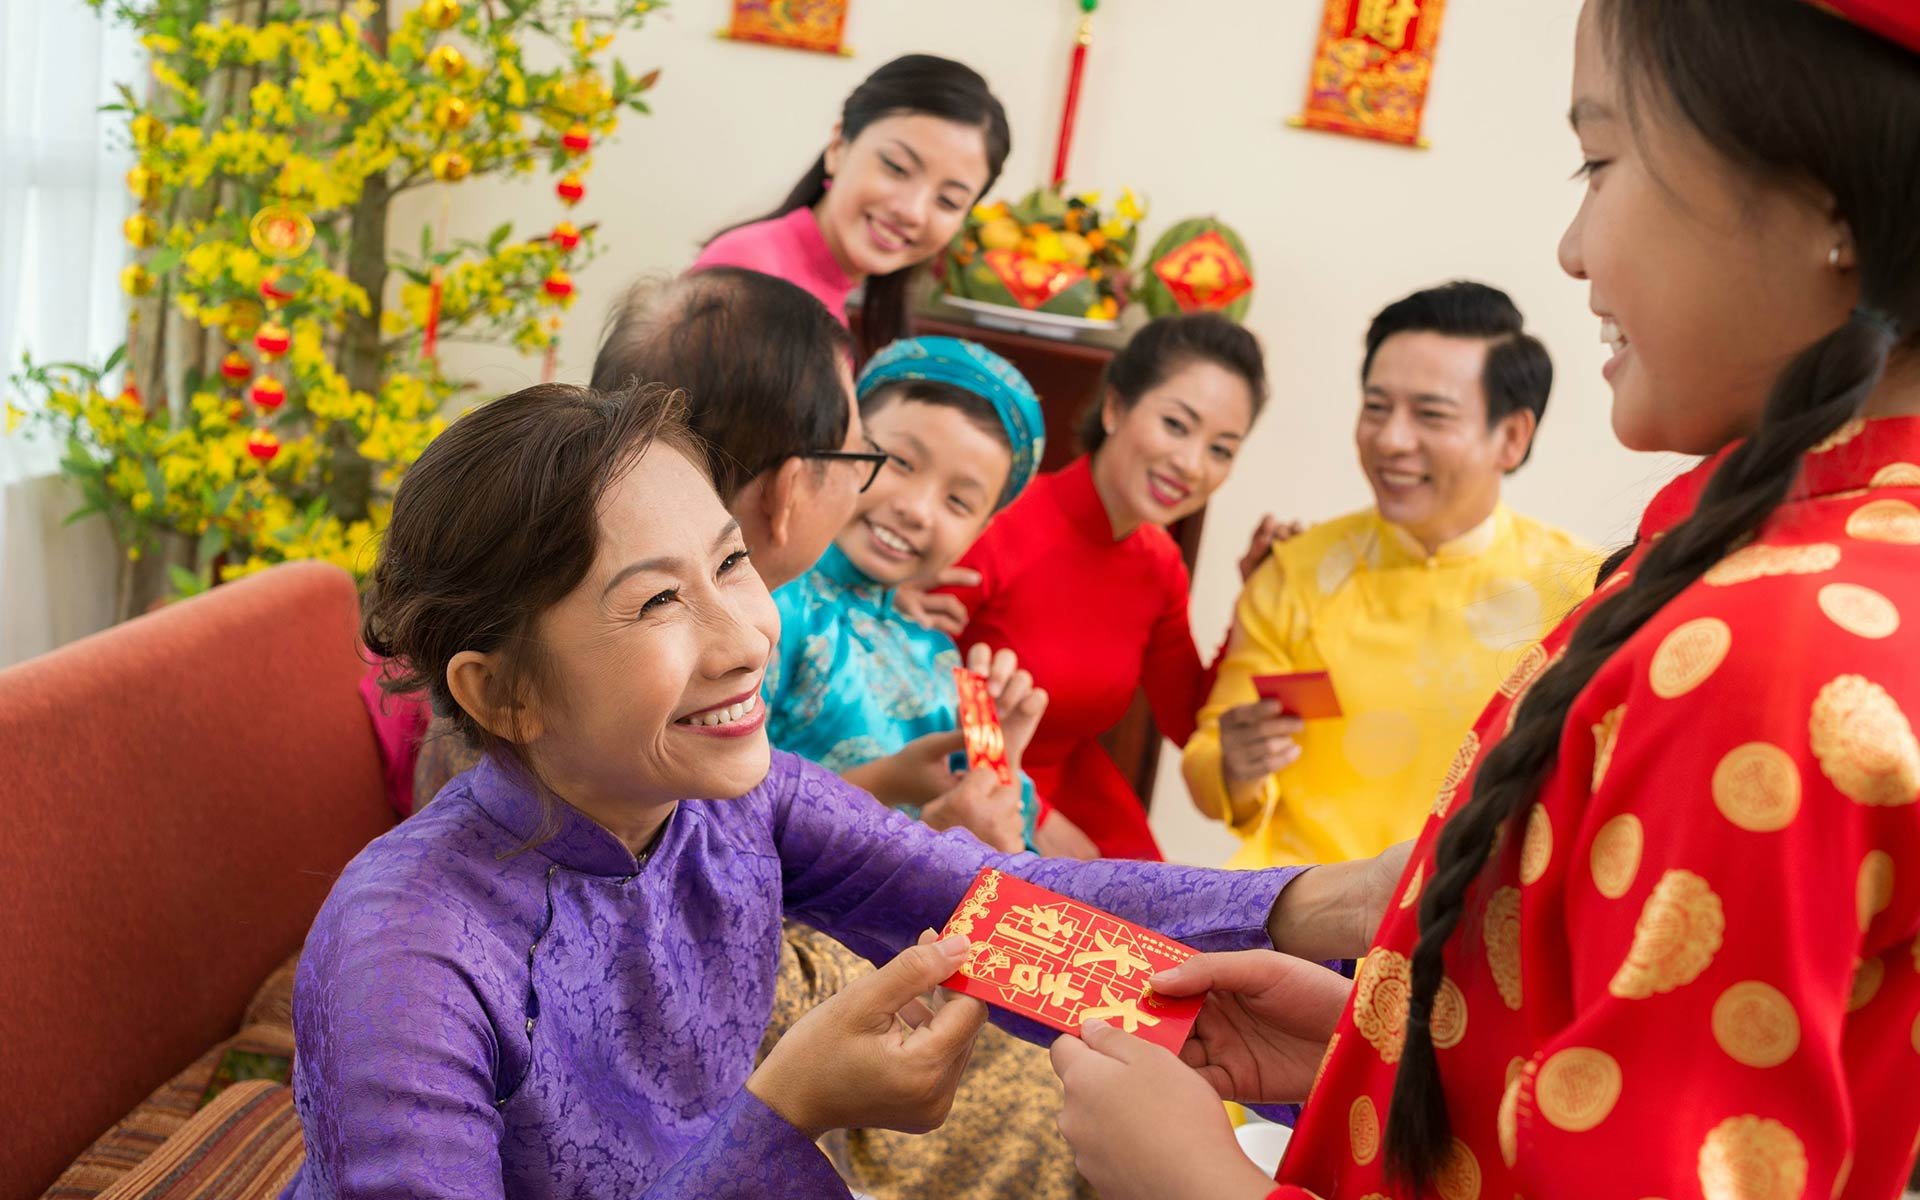 “Li Xi” Or Lucky Money In Vietnamese Culture